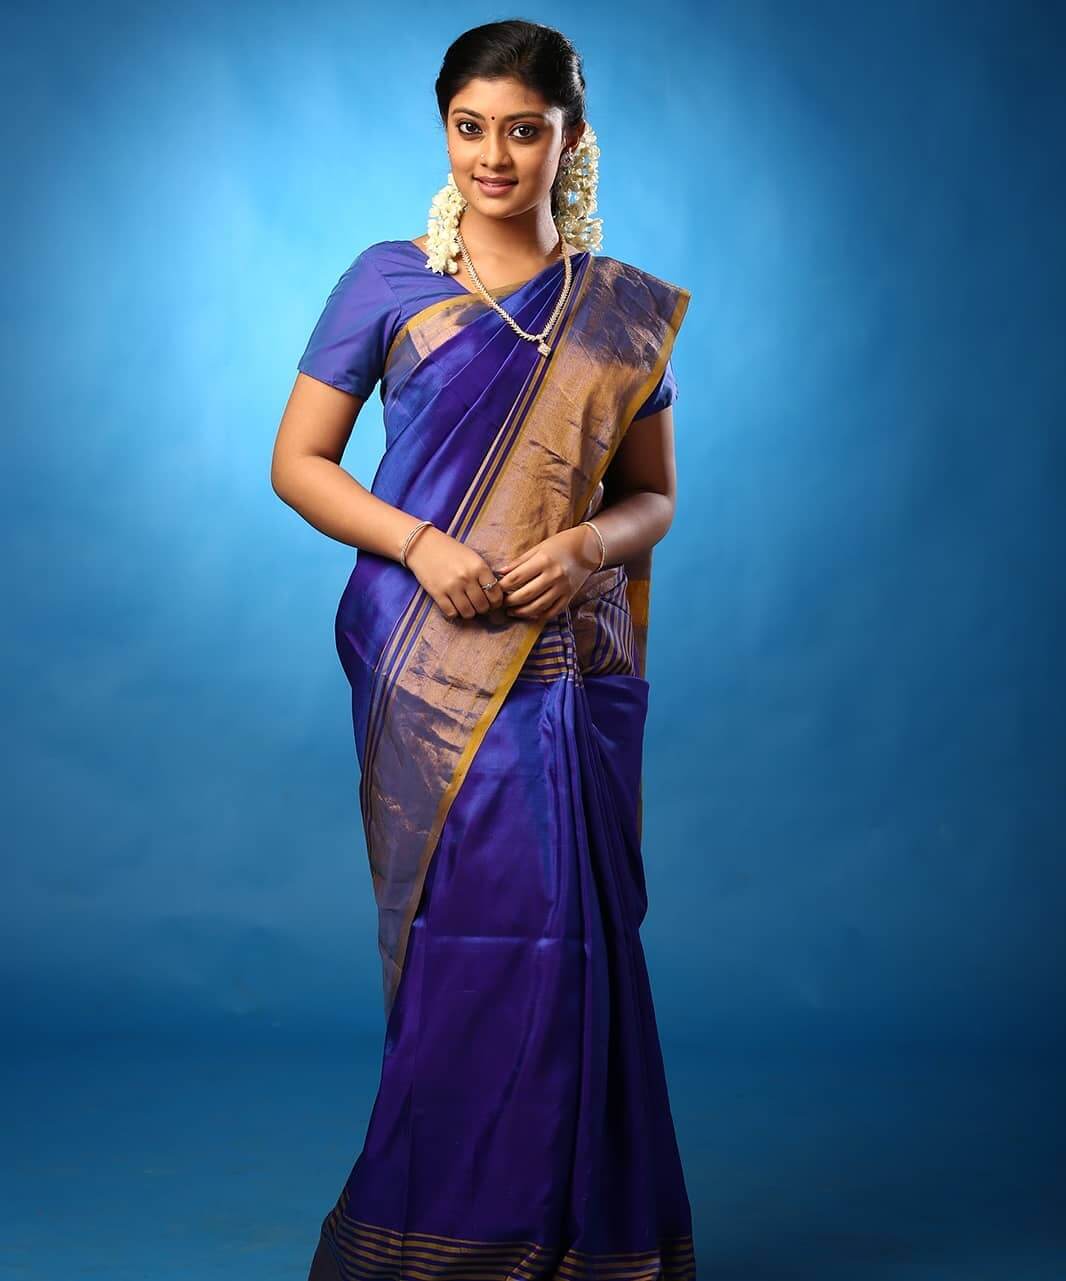 Ammu Abhirami Easy & Simple Saree Radiant Looks & Outfits In Blue Silk Saree With Gajra Hair Style 